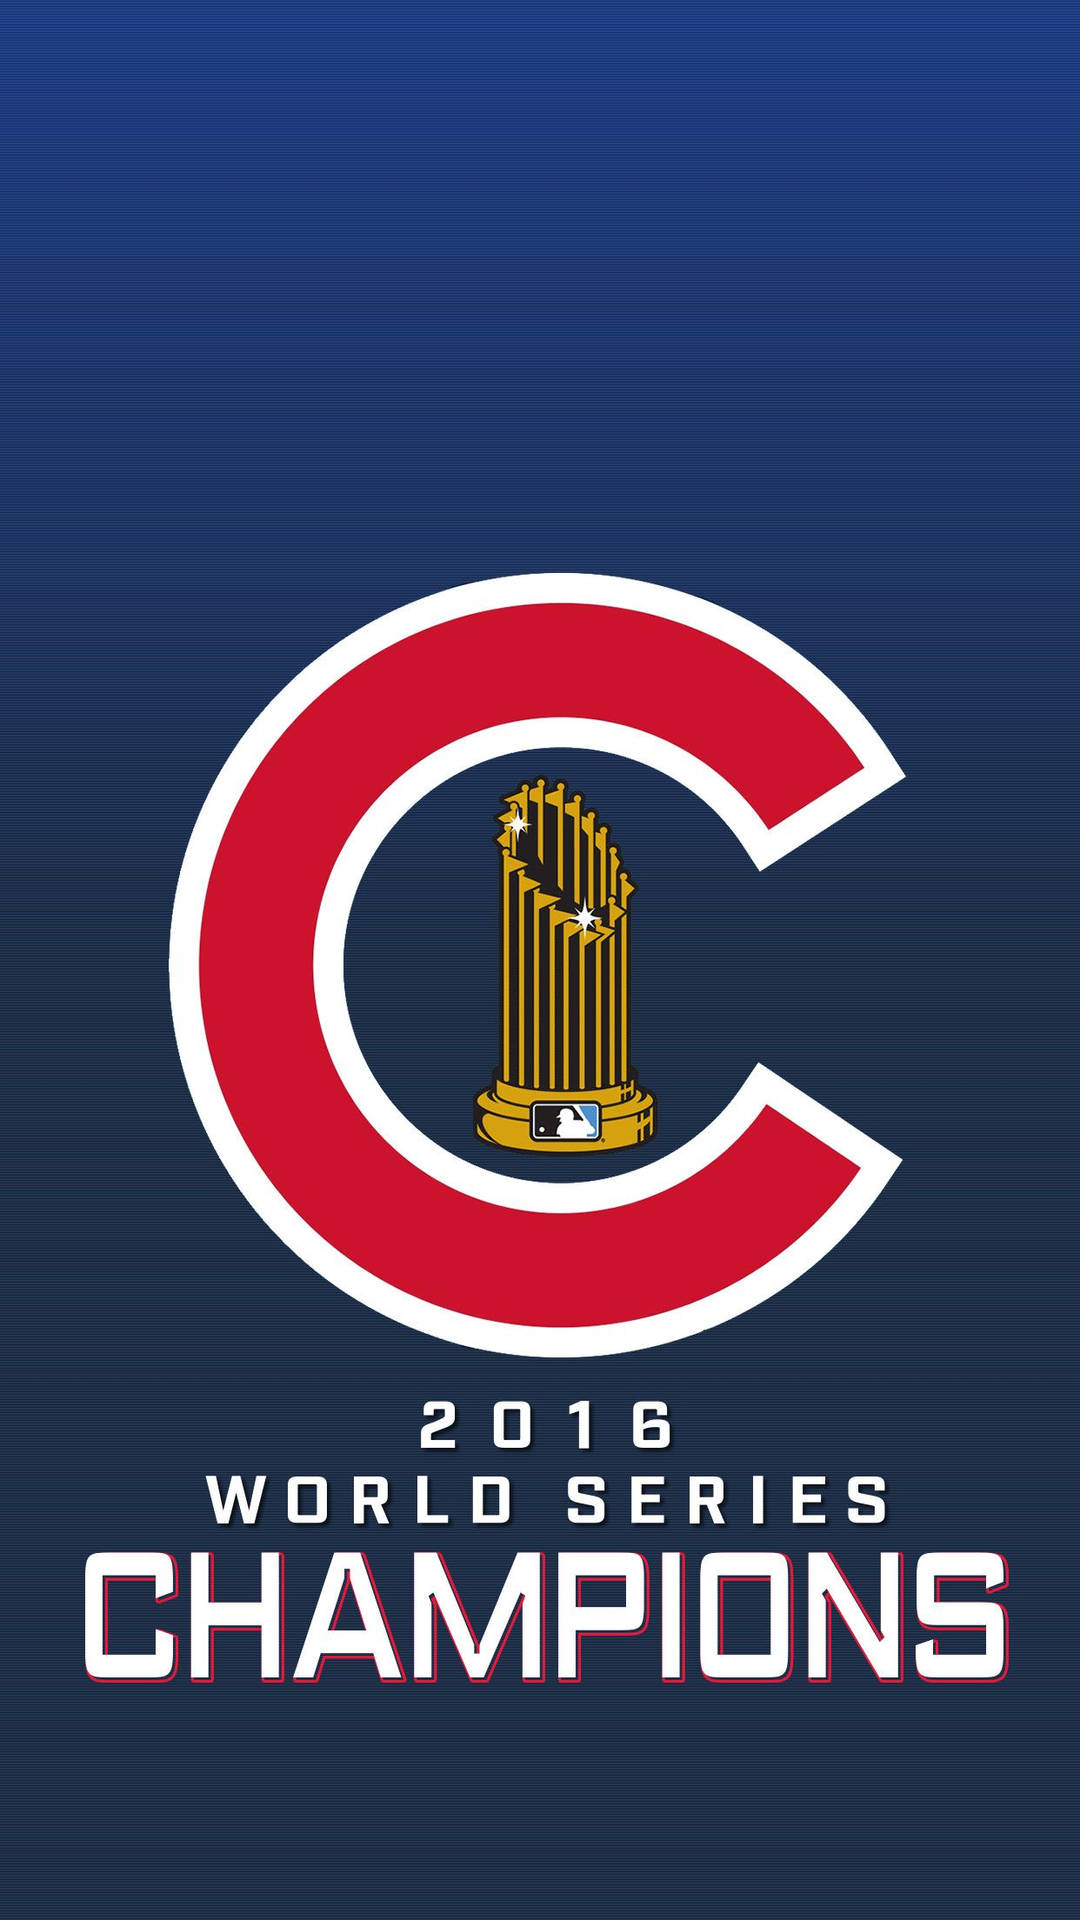 Chicago Cubs World Championship Wallpaper